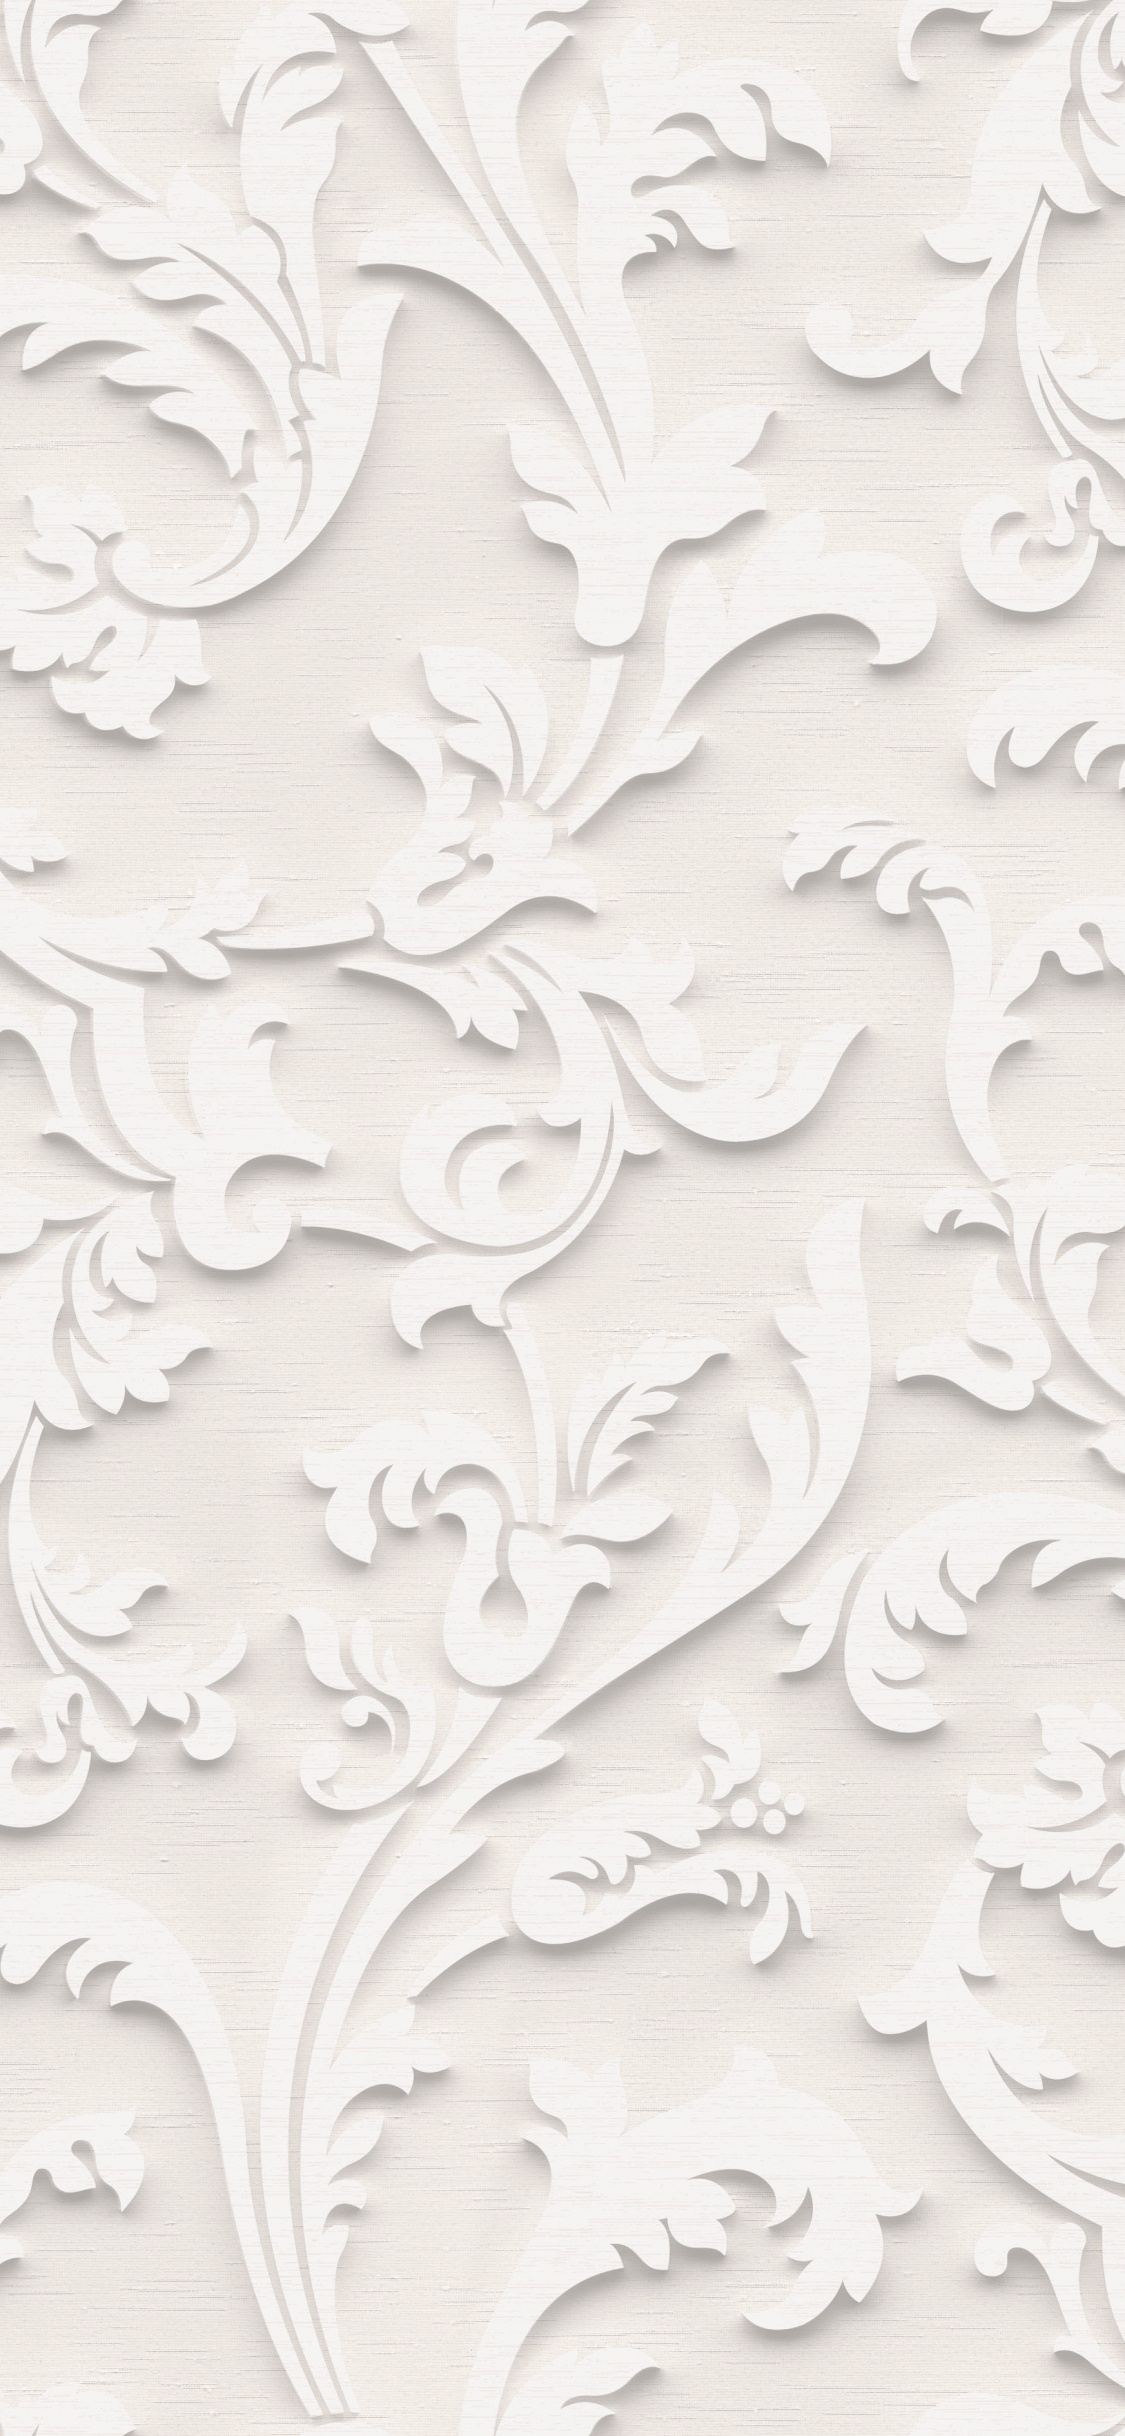 Textil Floral Blanco y Gris. Wallpaper in 1125x2436 Resolution